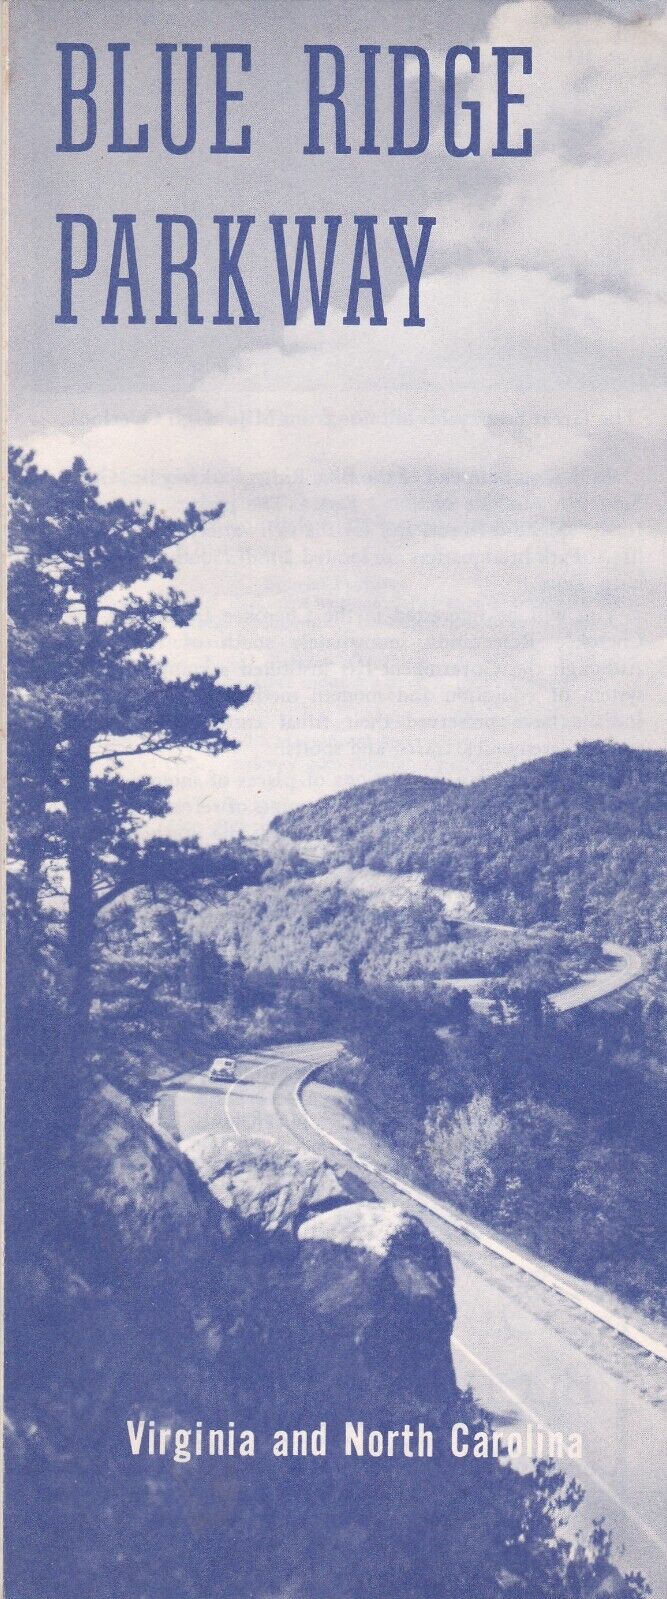 1959 Blue Ridge Parkway National Park Service Brochure